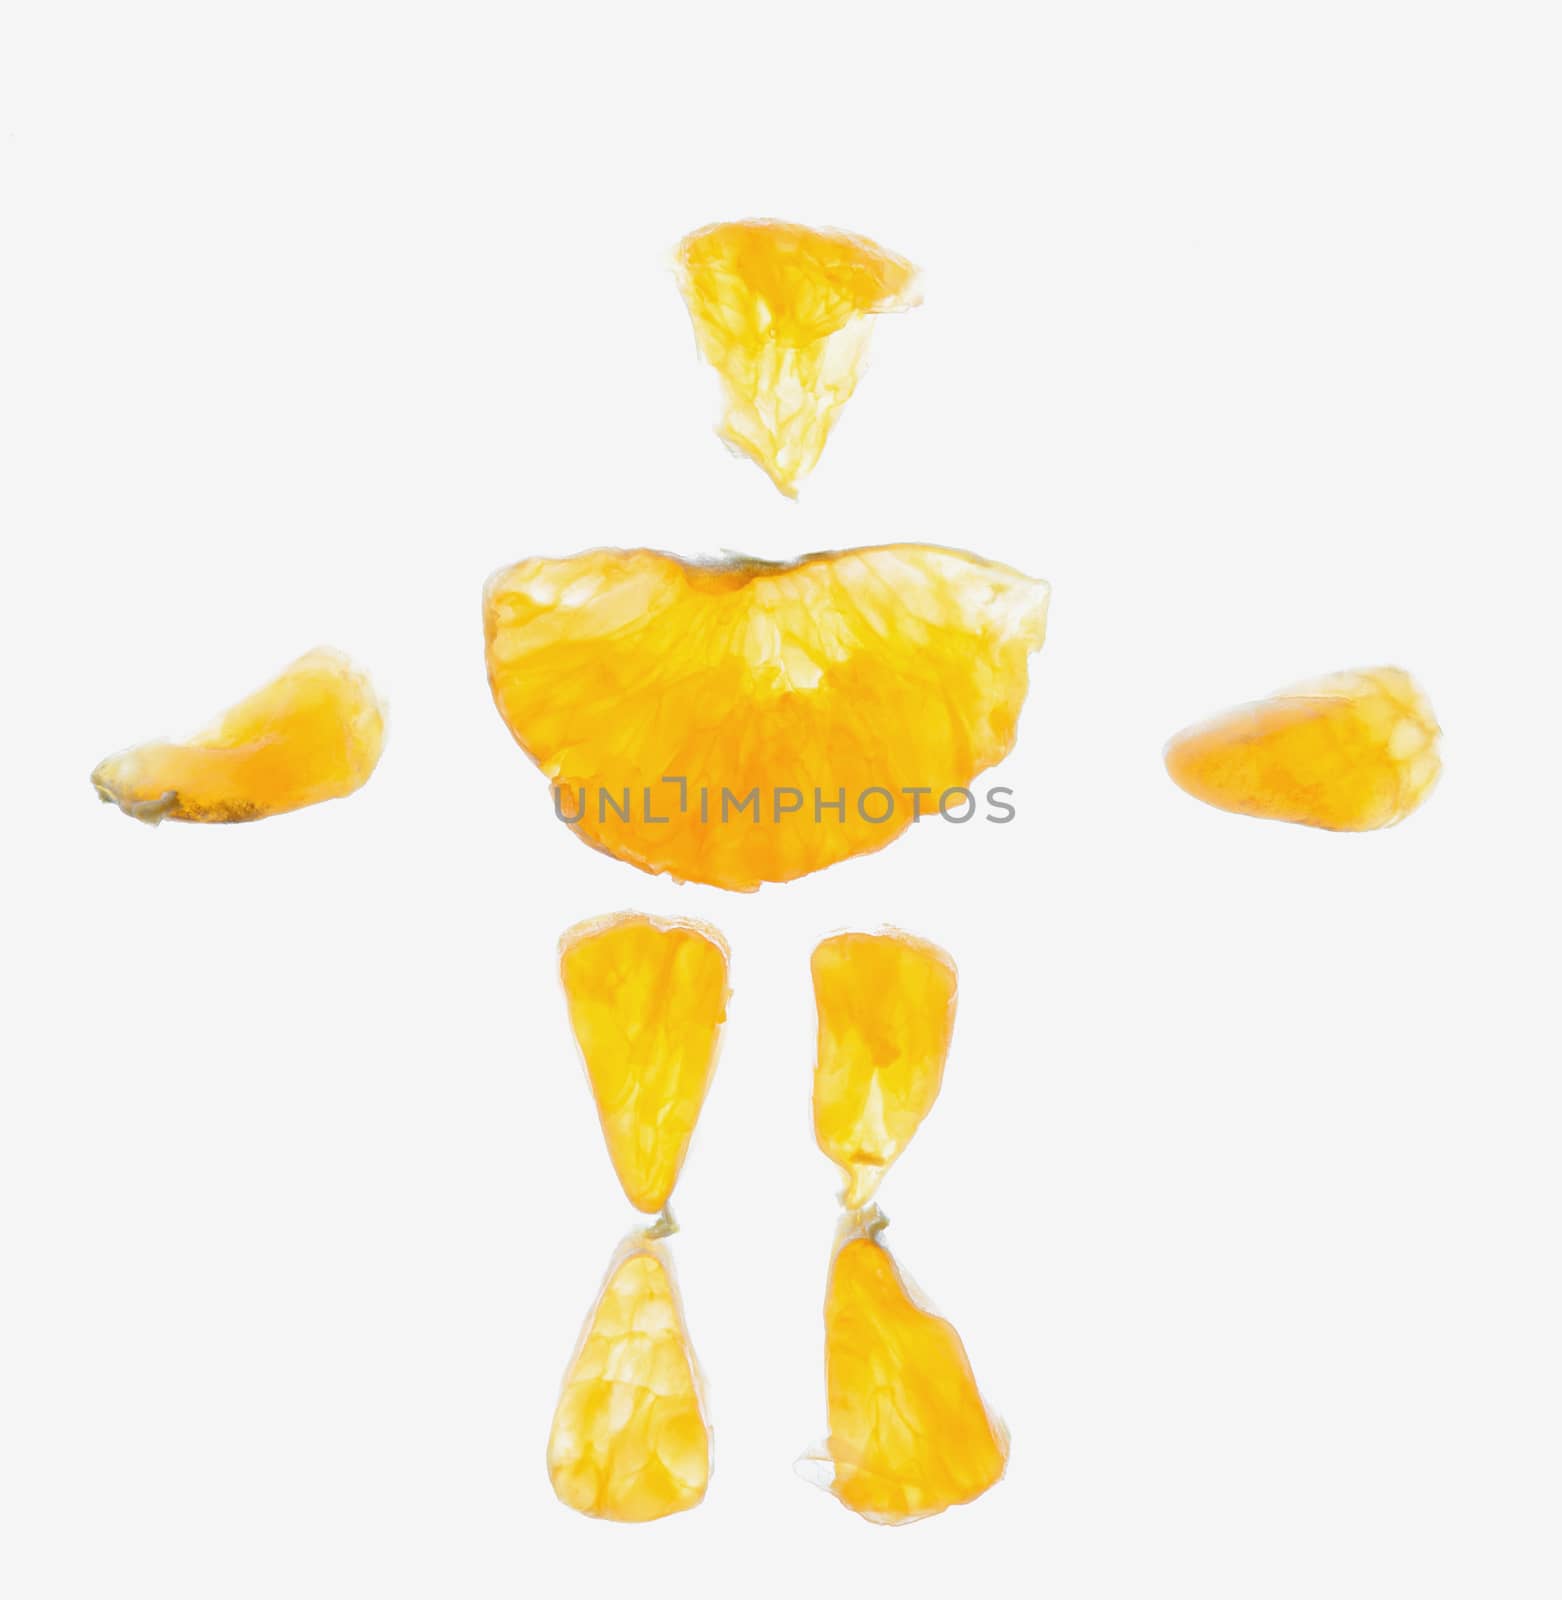 Mandarines slices on white background in human shape